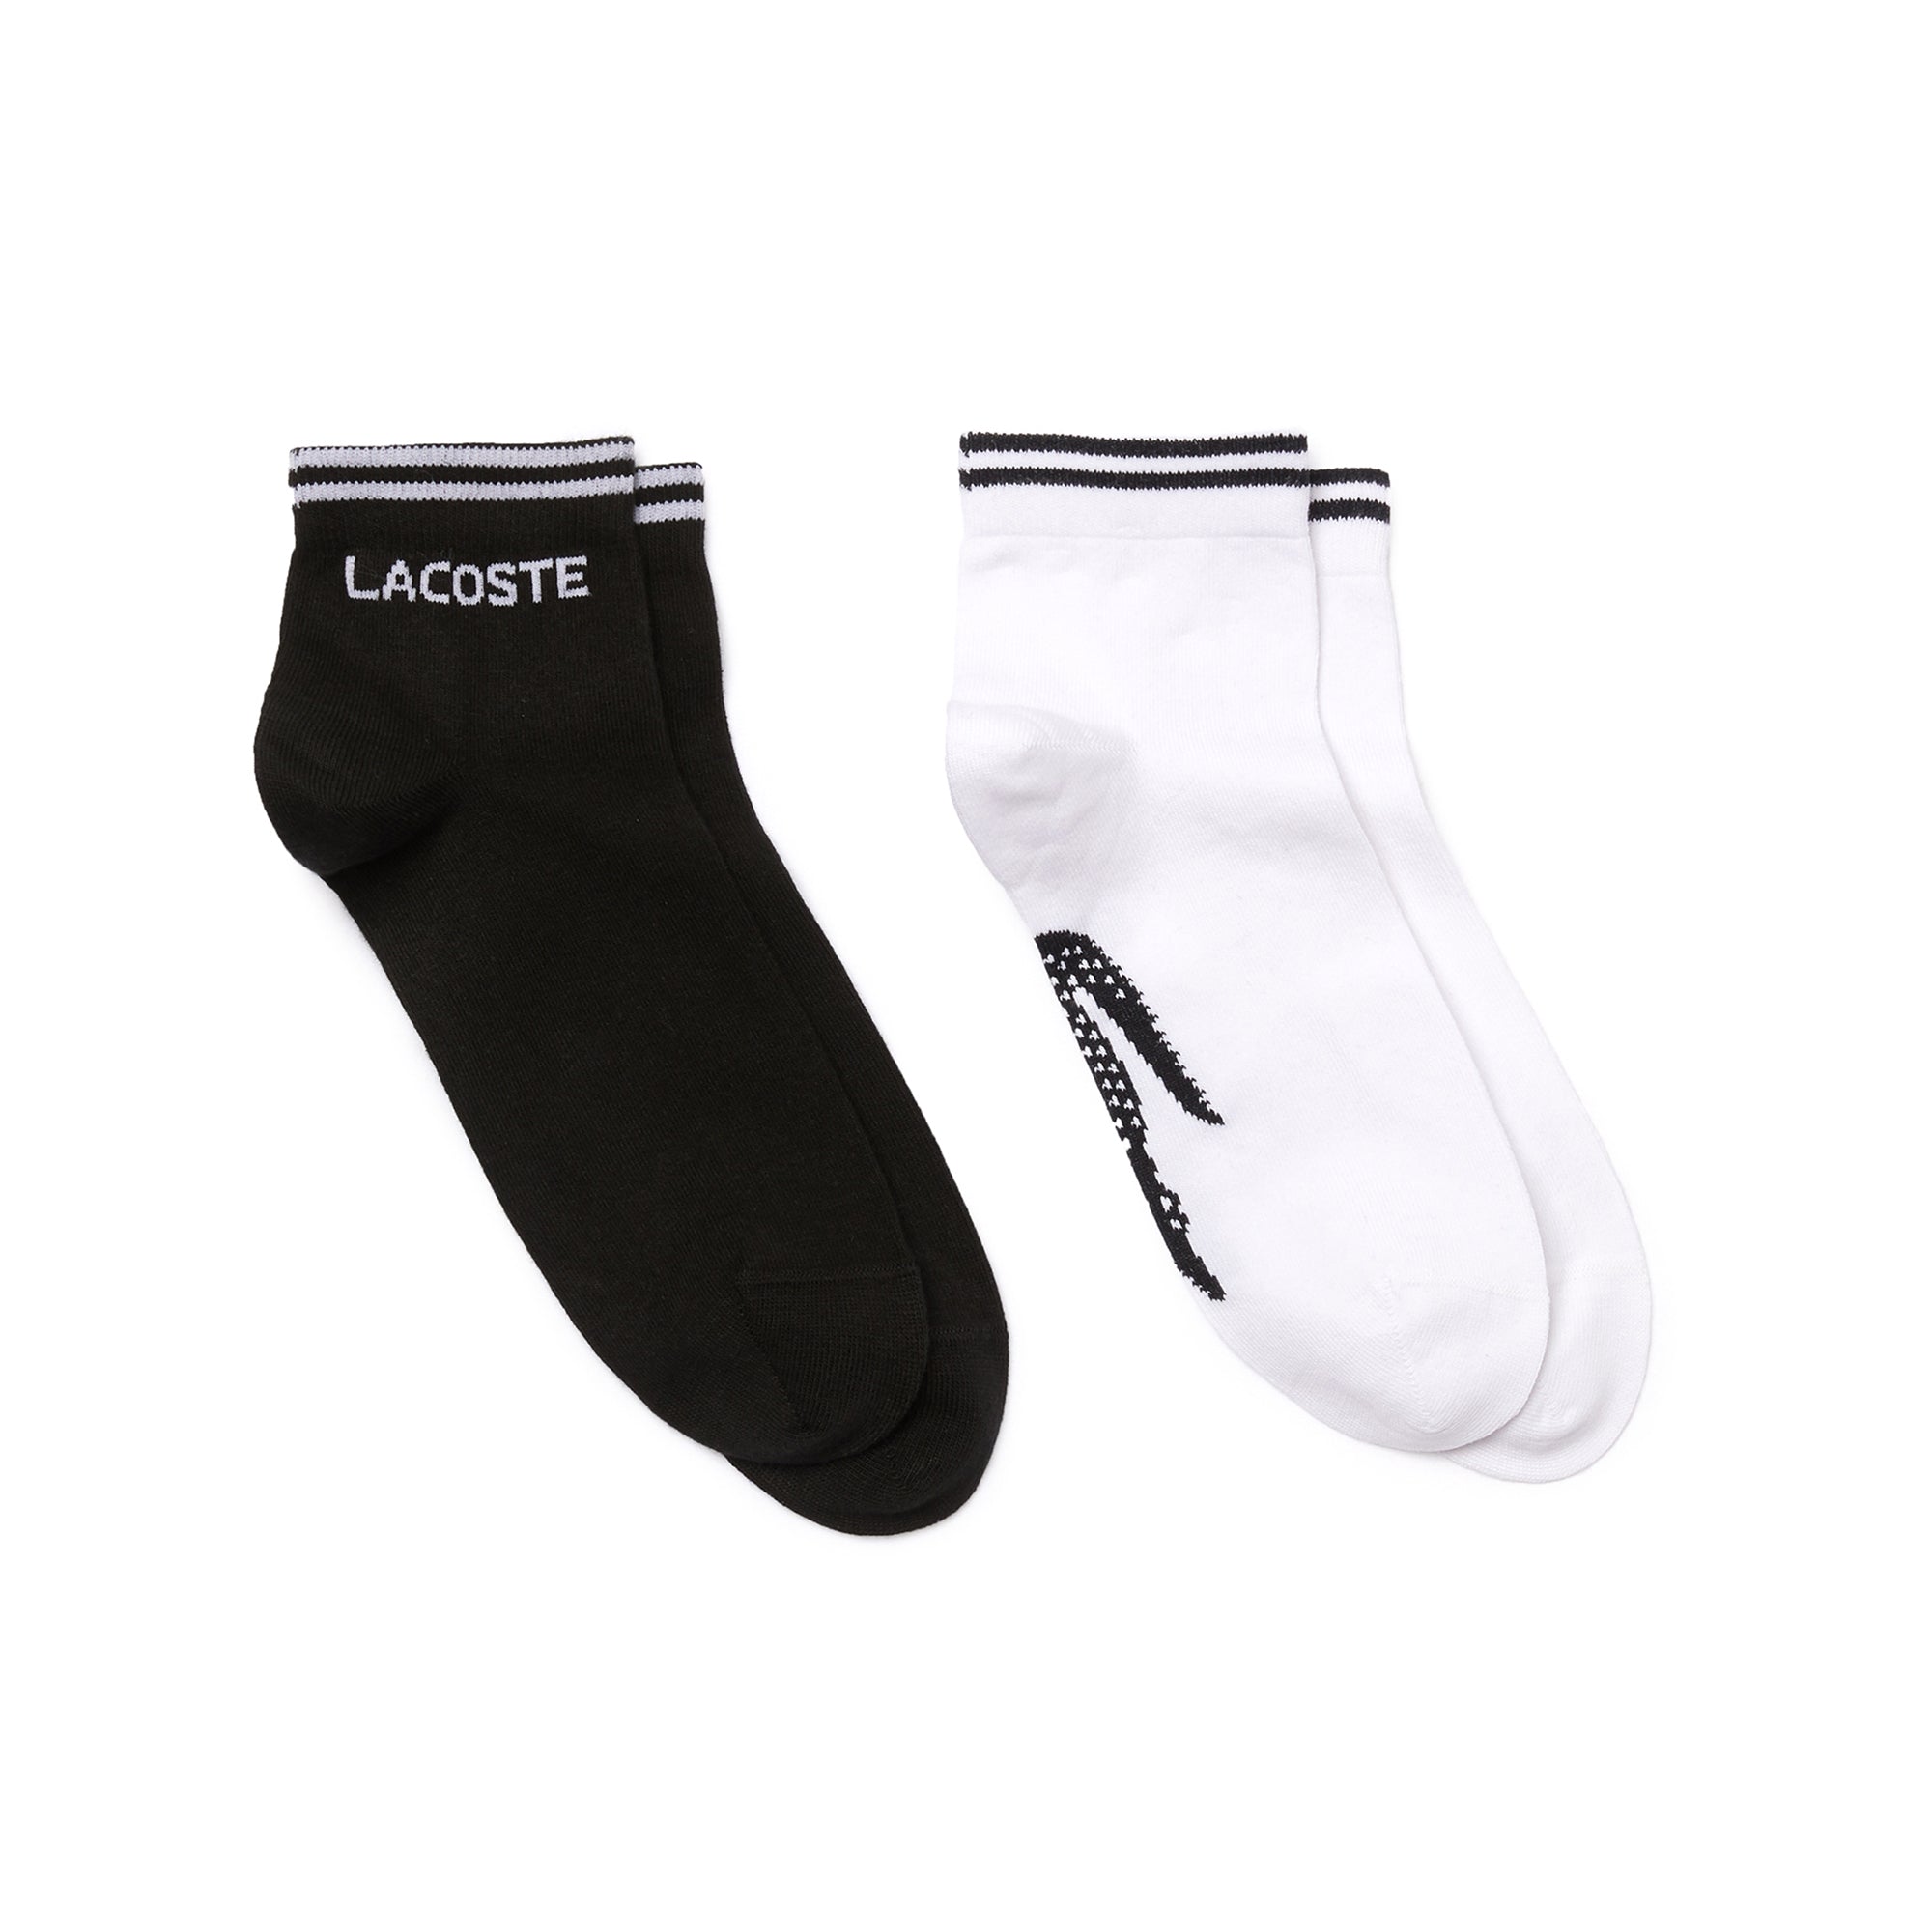 lacoste-2-pack-low-cut-socks-ra2104-black-white-258